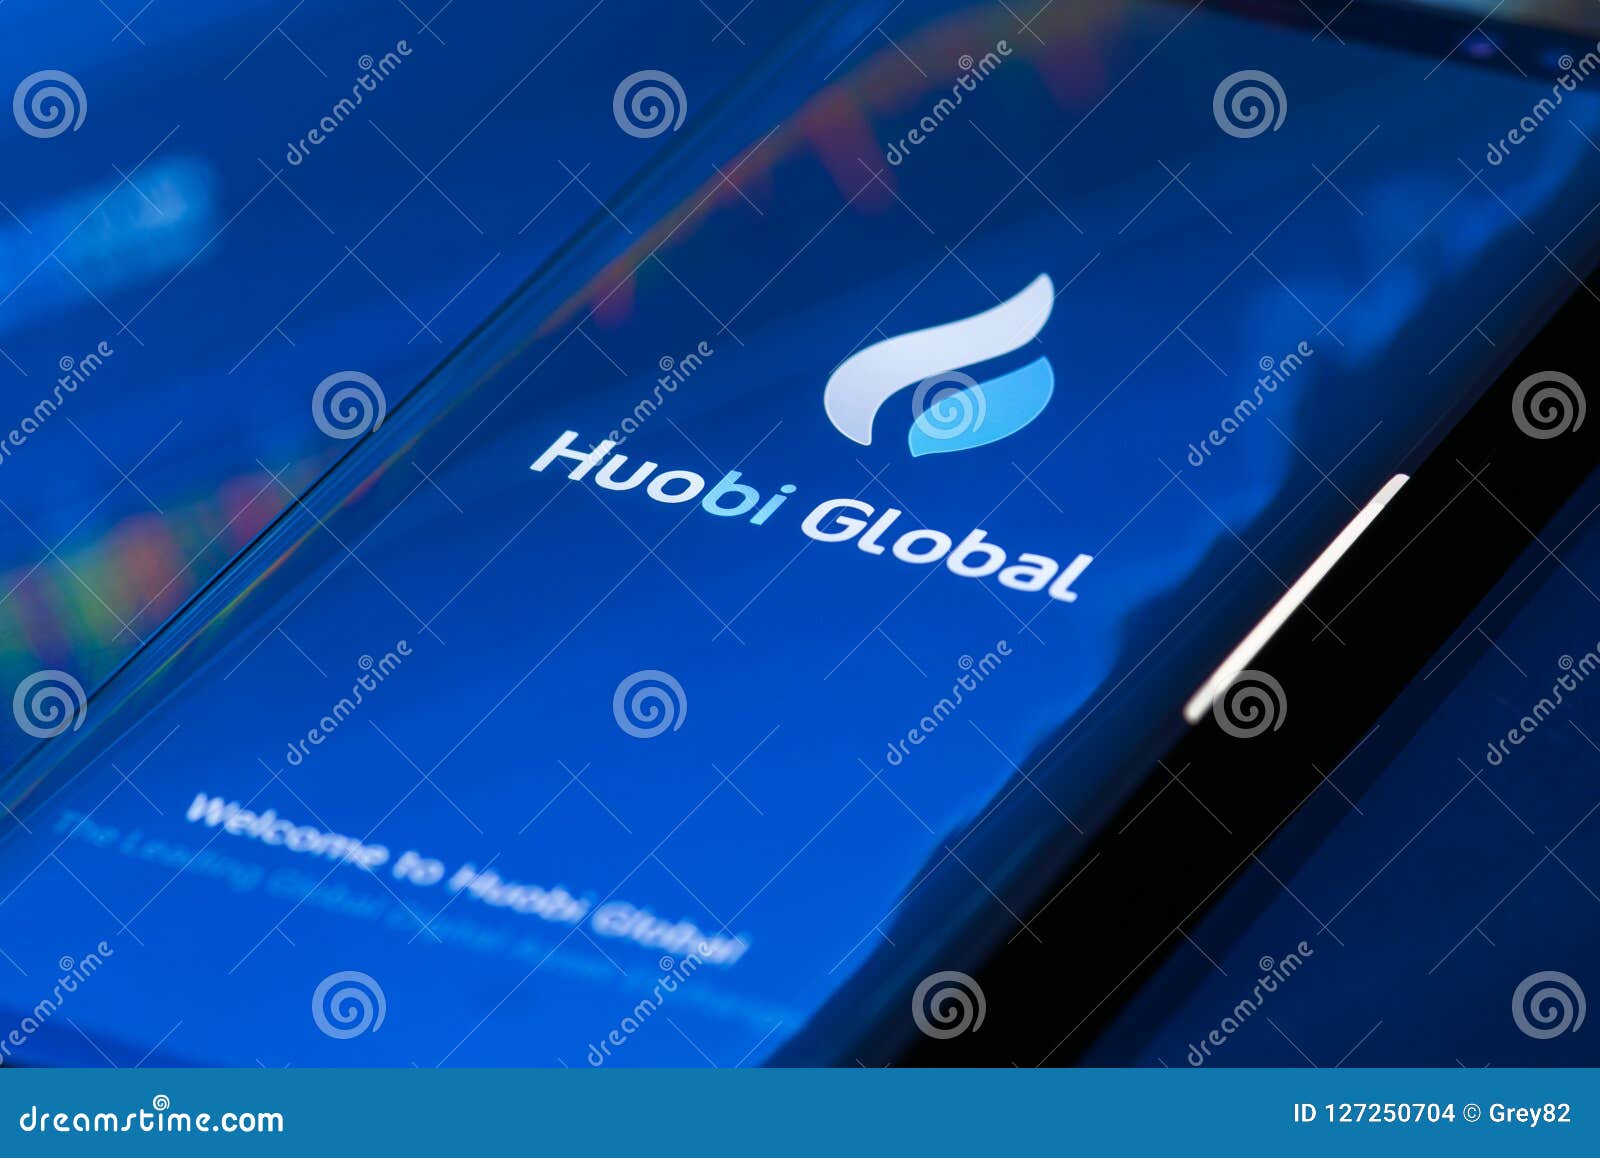 Huobi Global Mobile App Running On Smartphone. Editorial ...